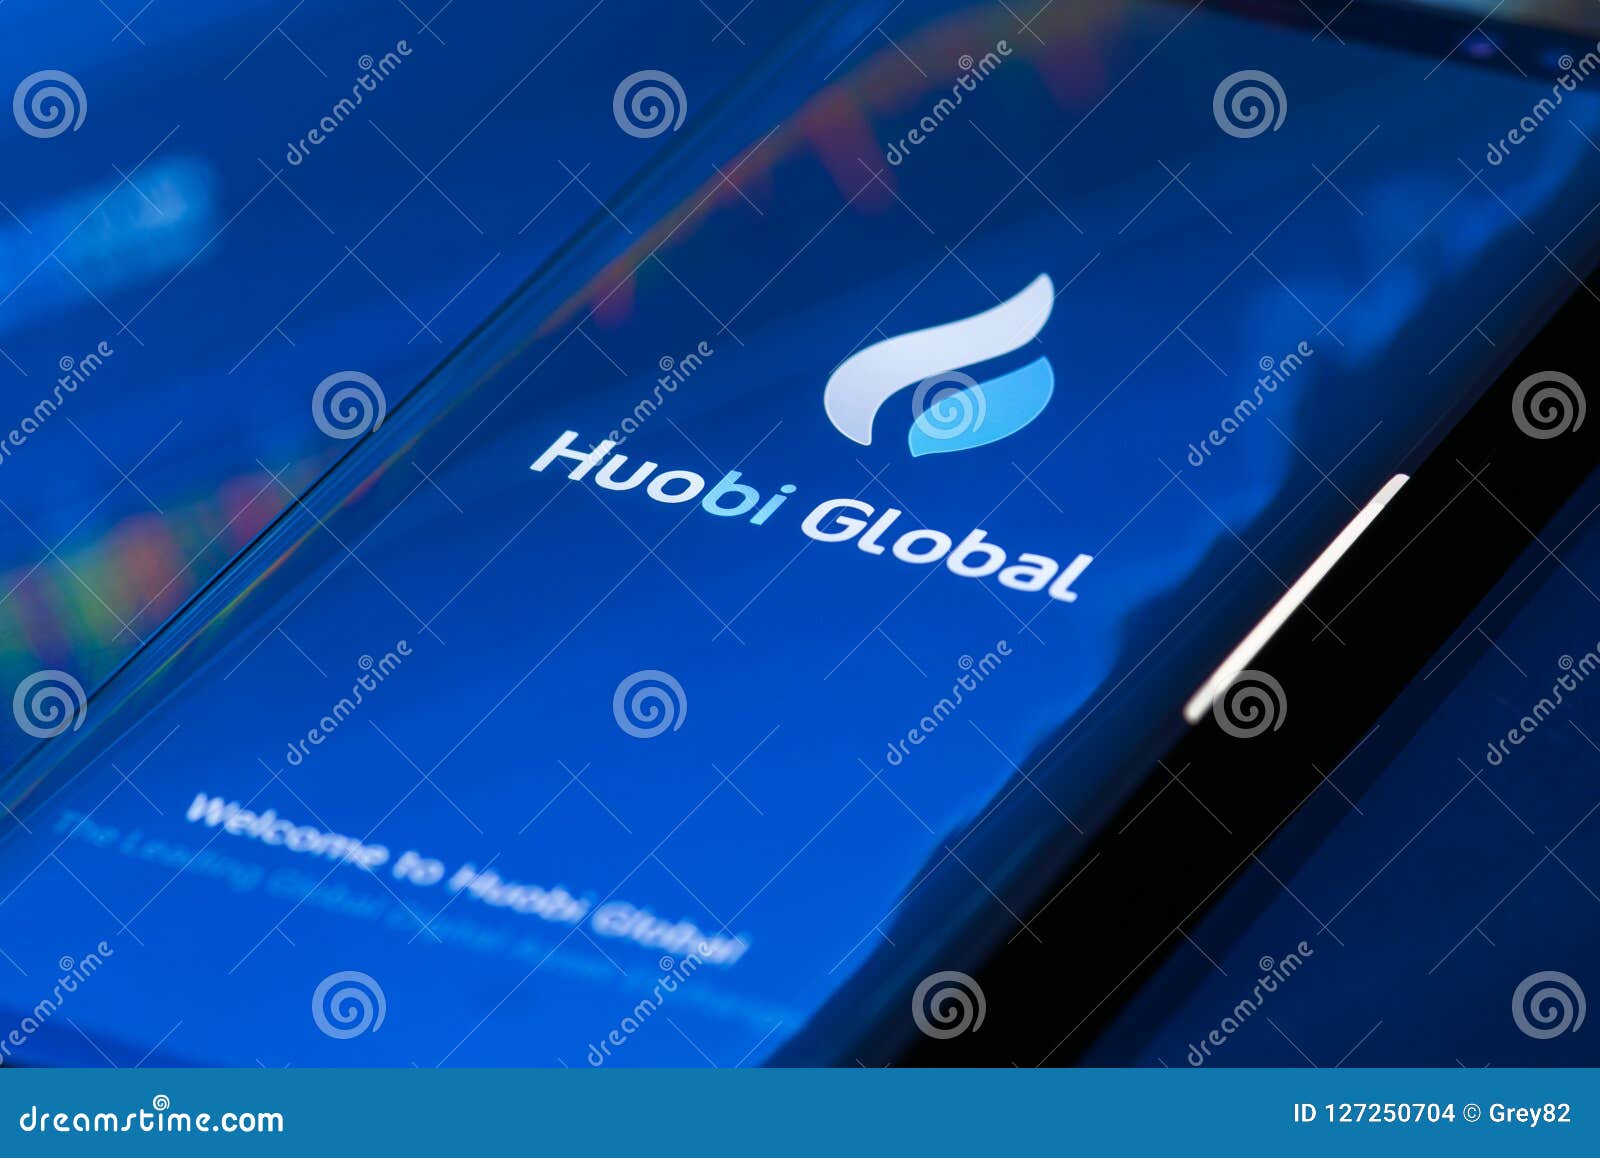 Huobi Global Mobile App Running On Smartphone. Editorial ...